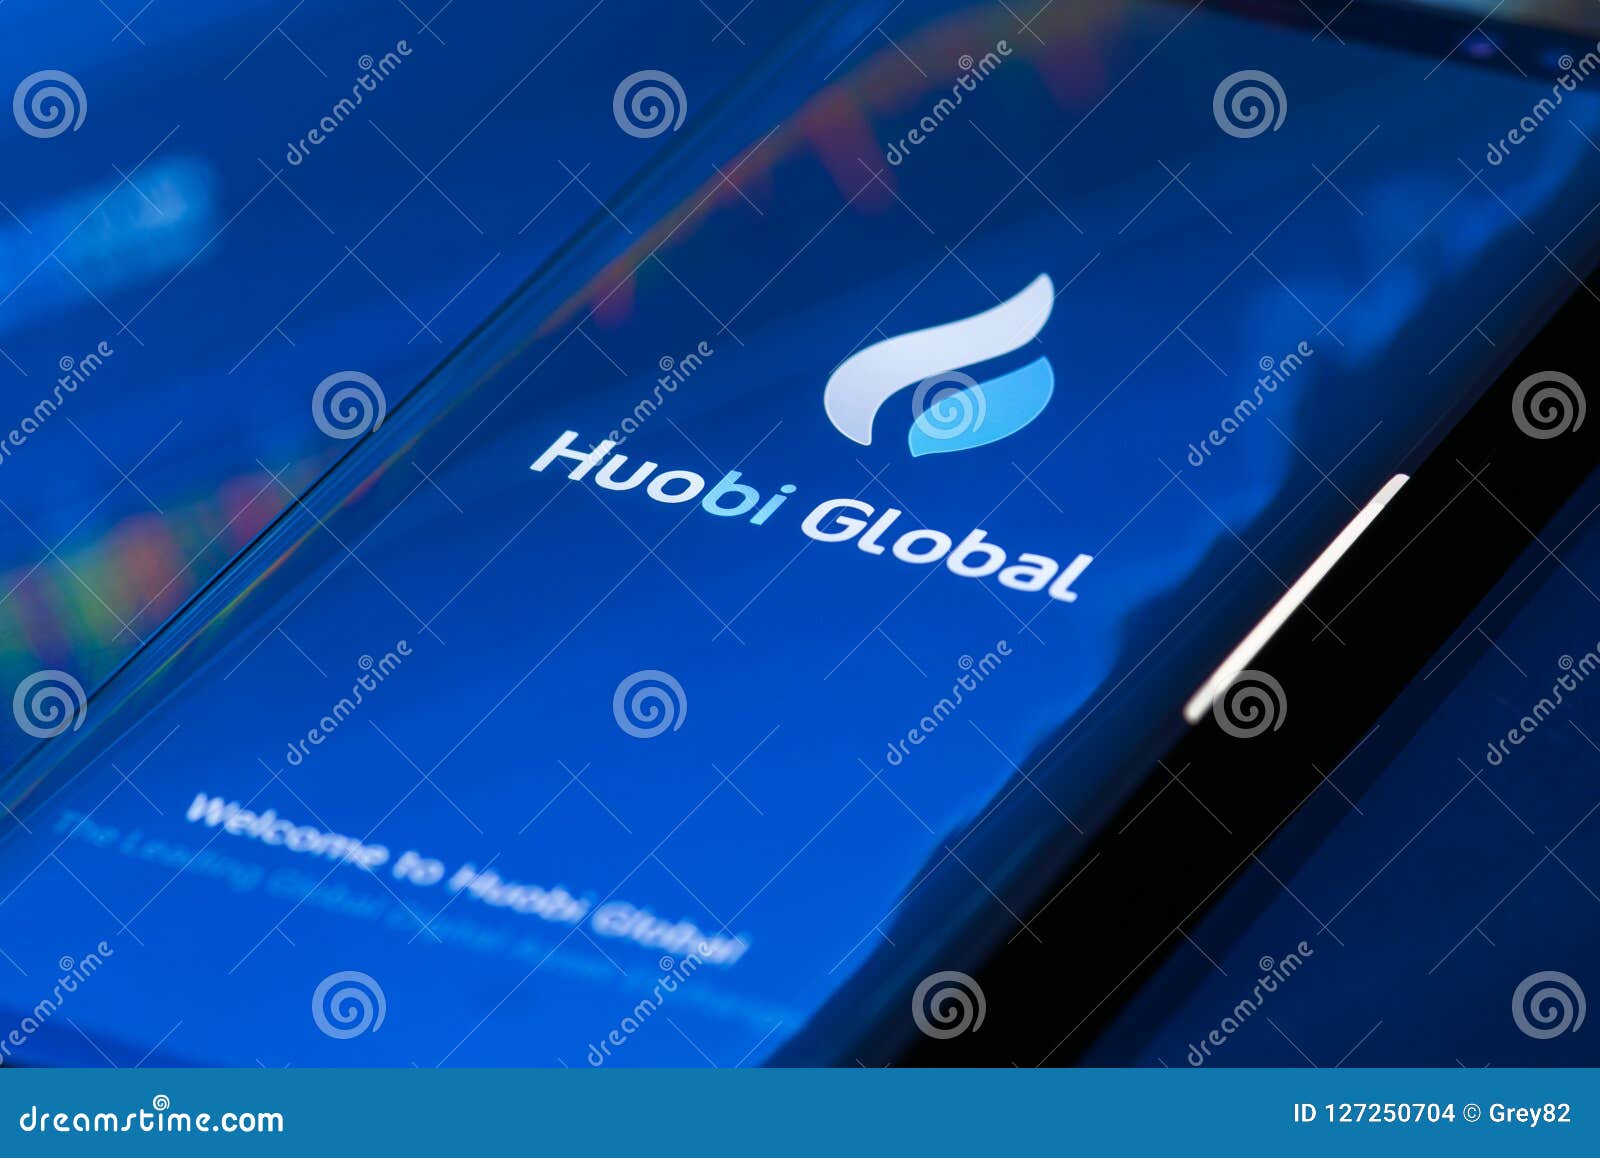 Huobi Global Mobile App Running On Smartphone. Editorial ...